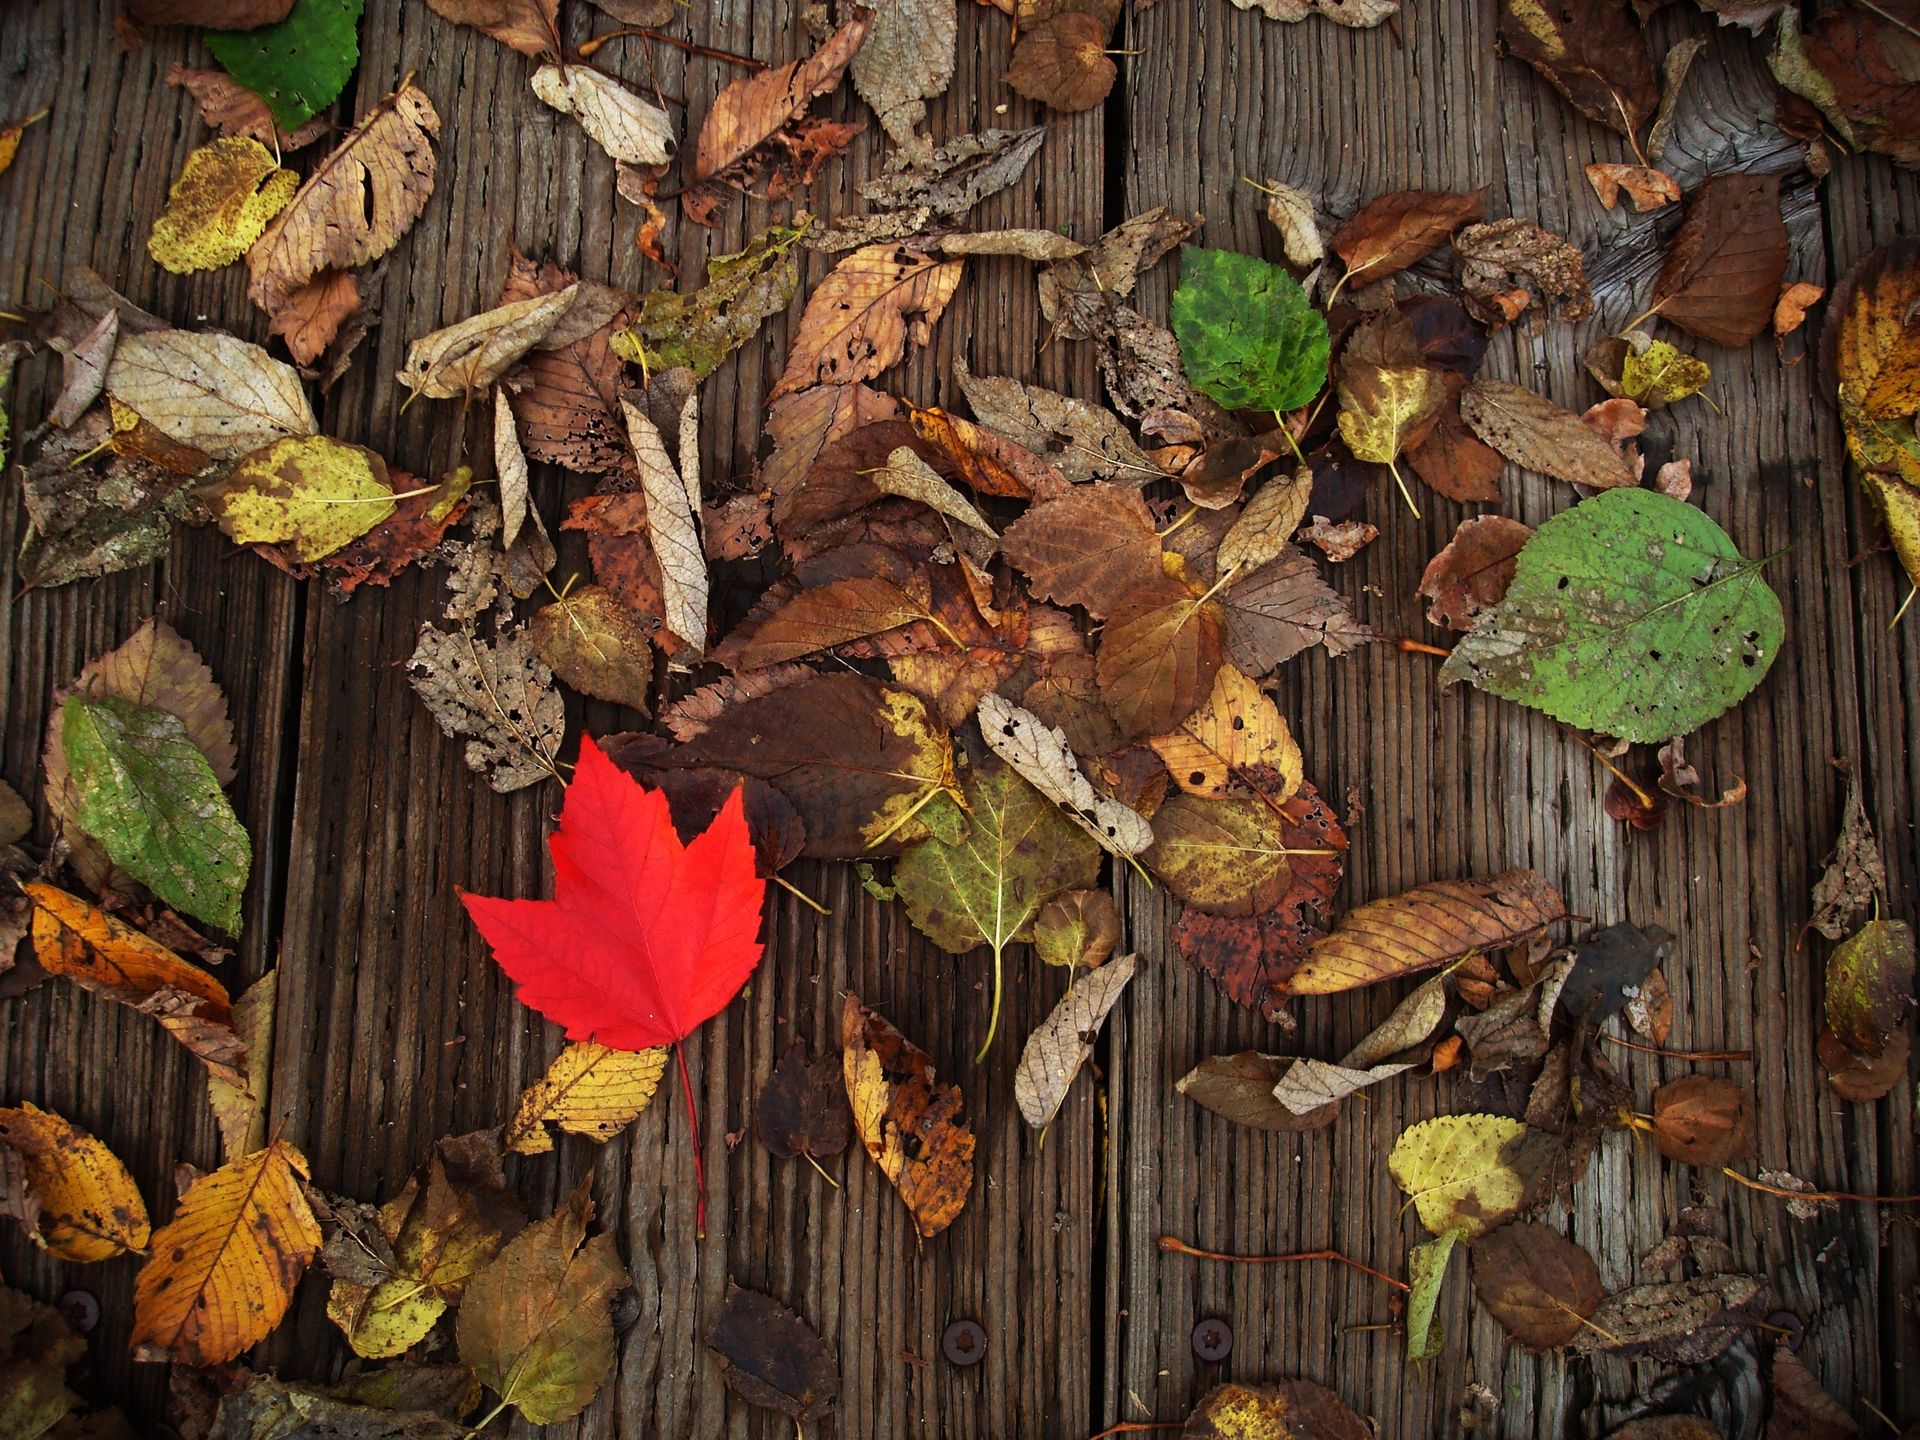 A red leaf lying among older fallen leaves on wooden boards.